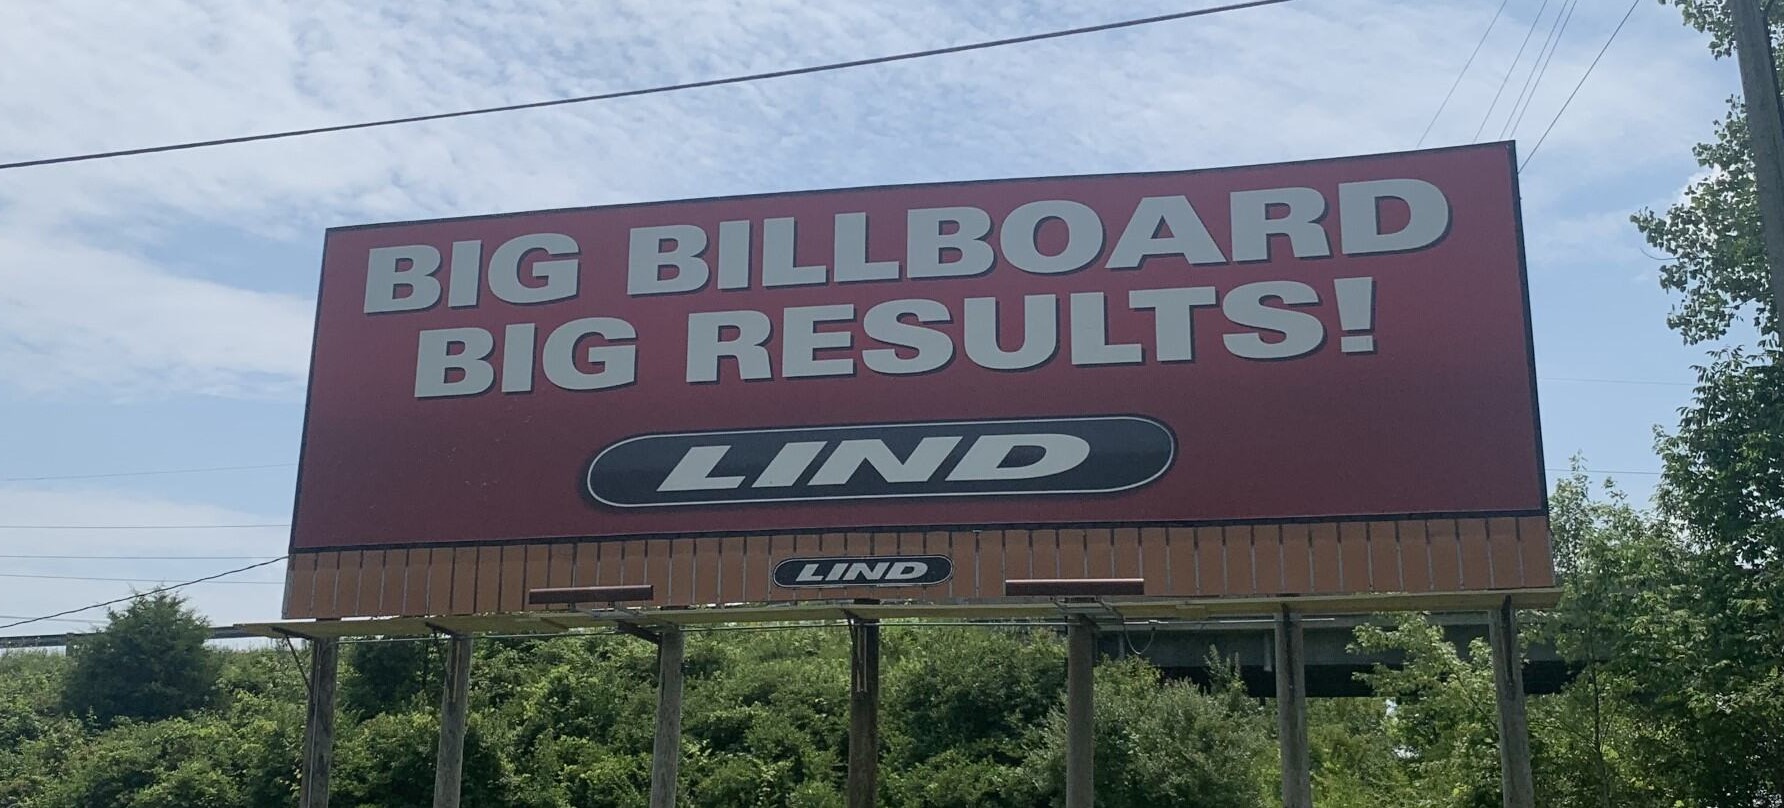 install-billboards-better-lind-signspring Install Billboards Better